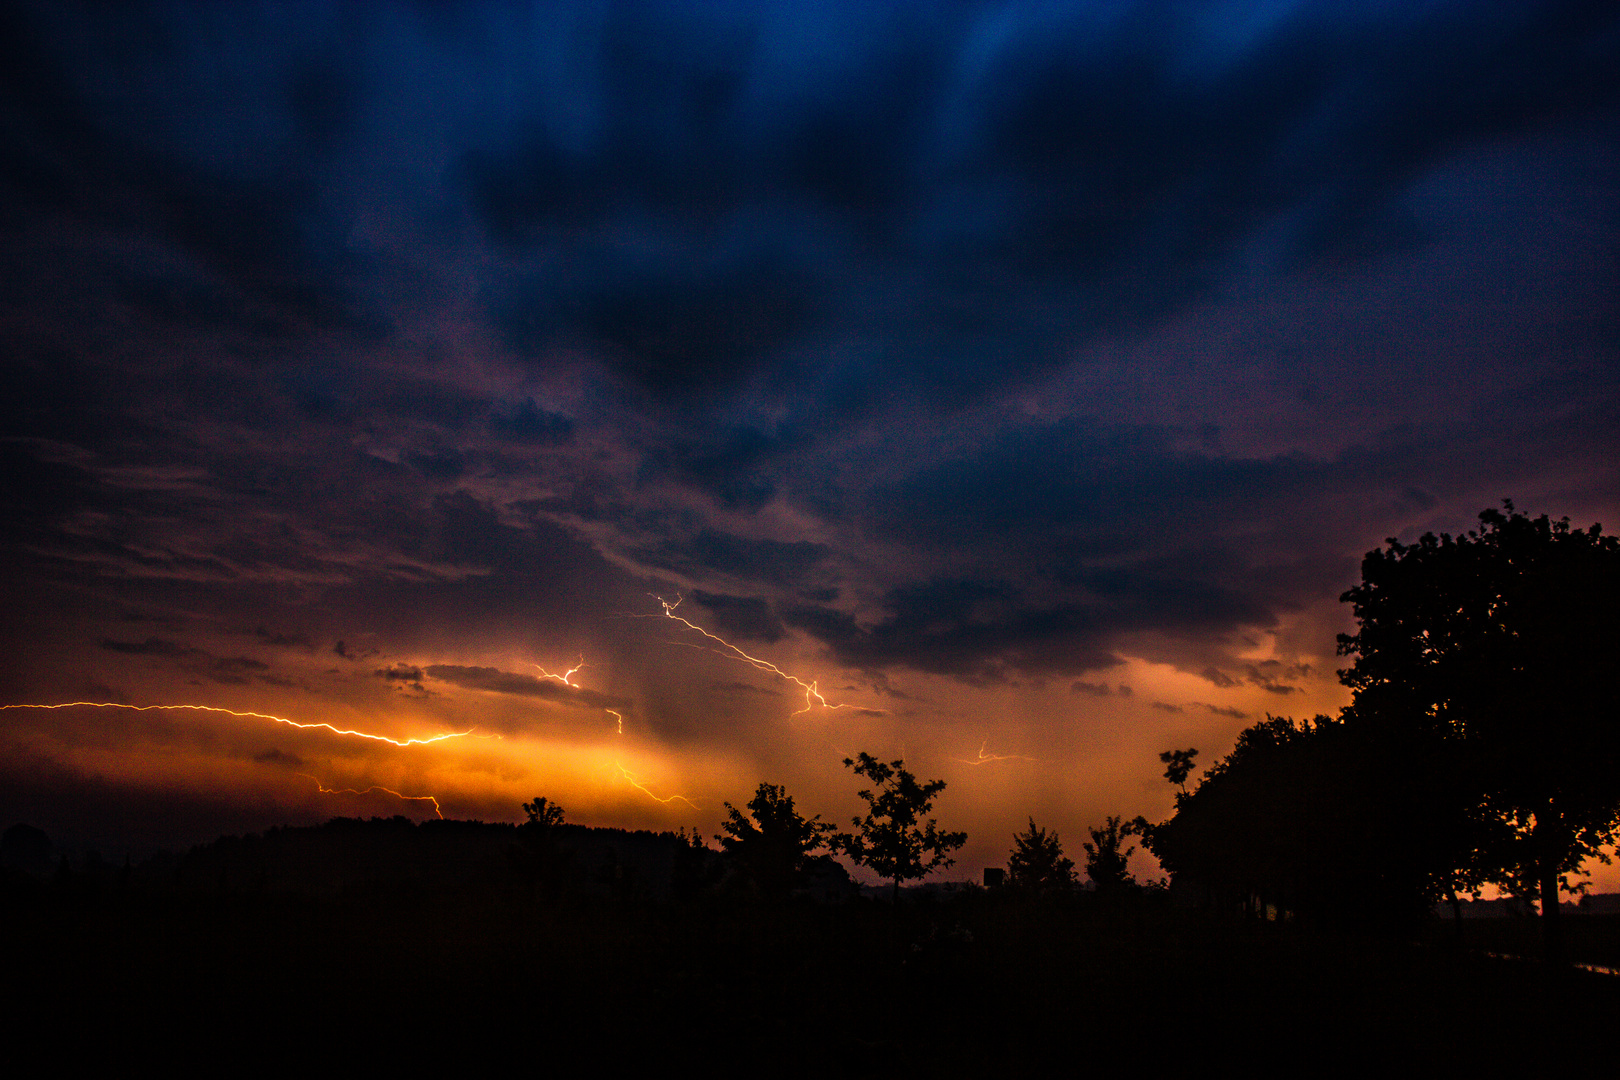 Thunderstorm, Rosendahl, Germany, 06-06-2014